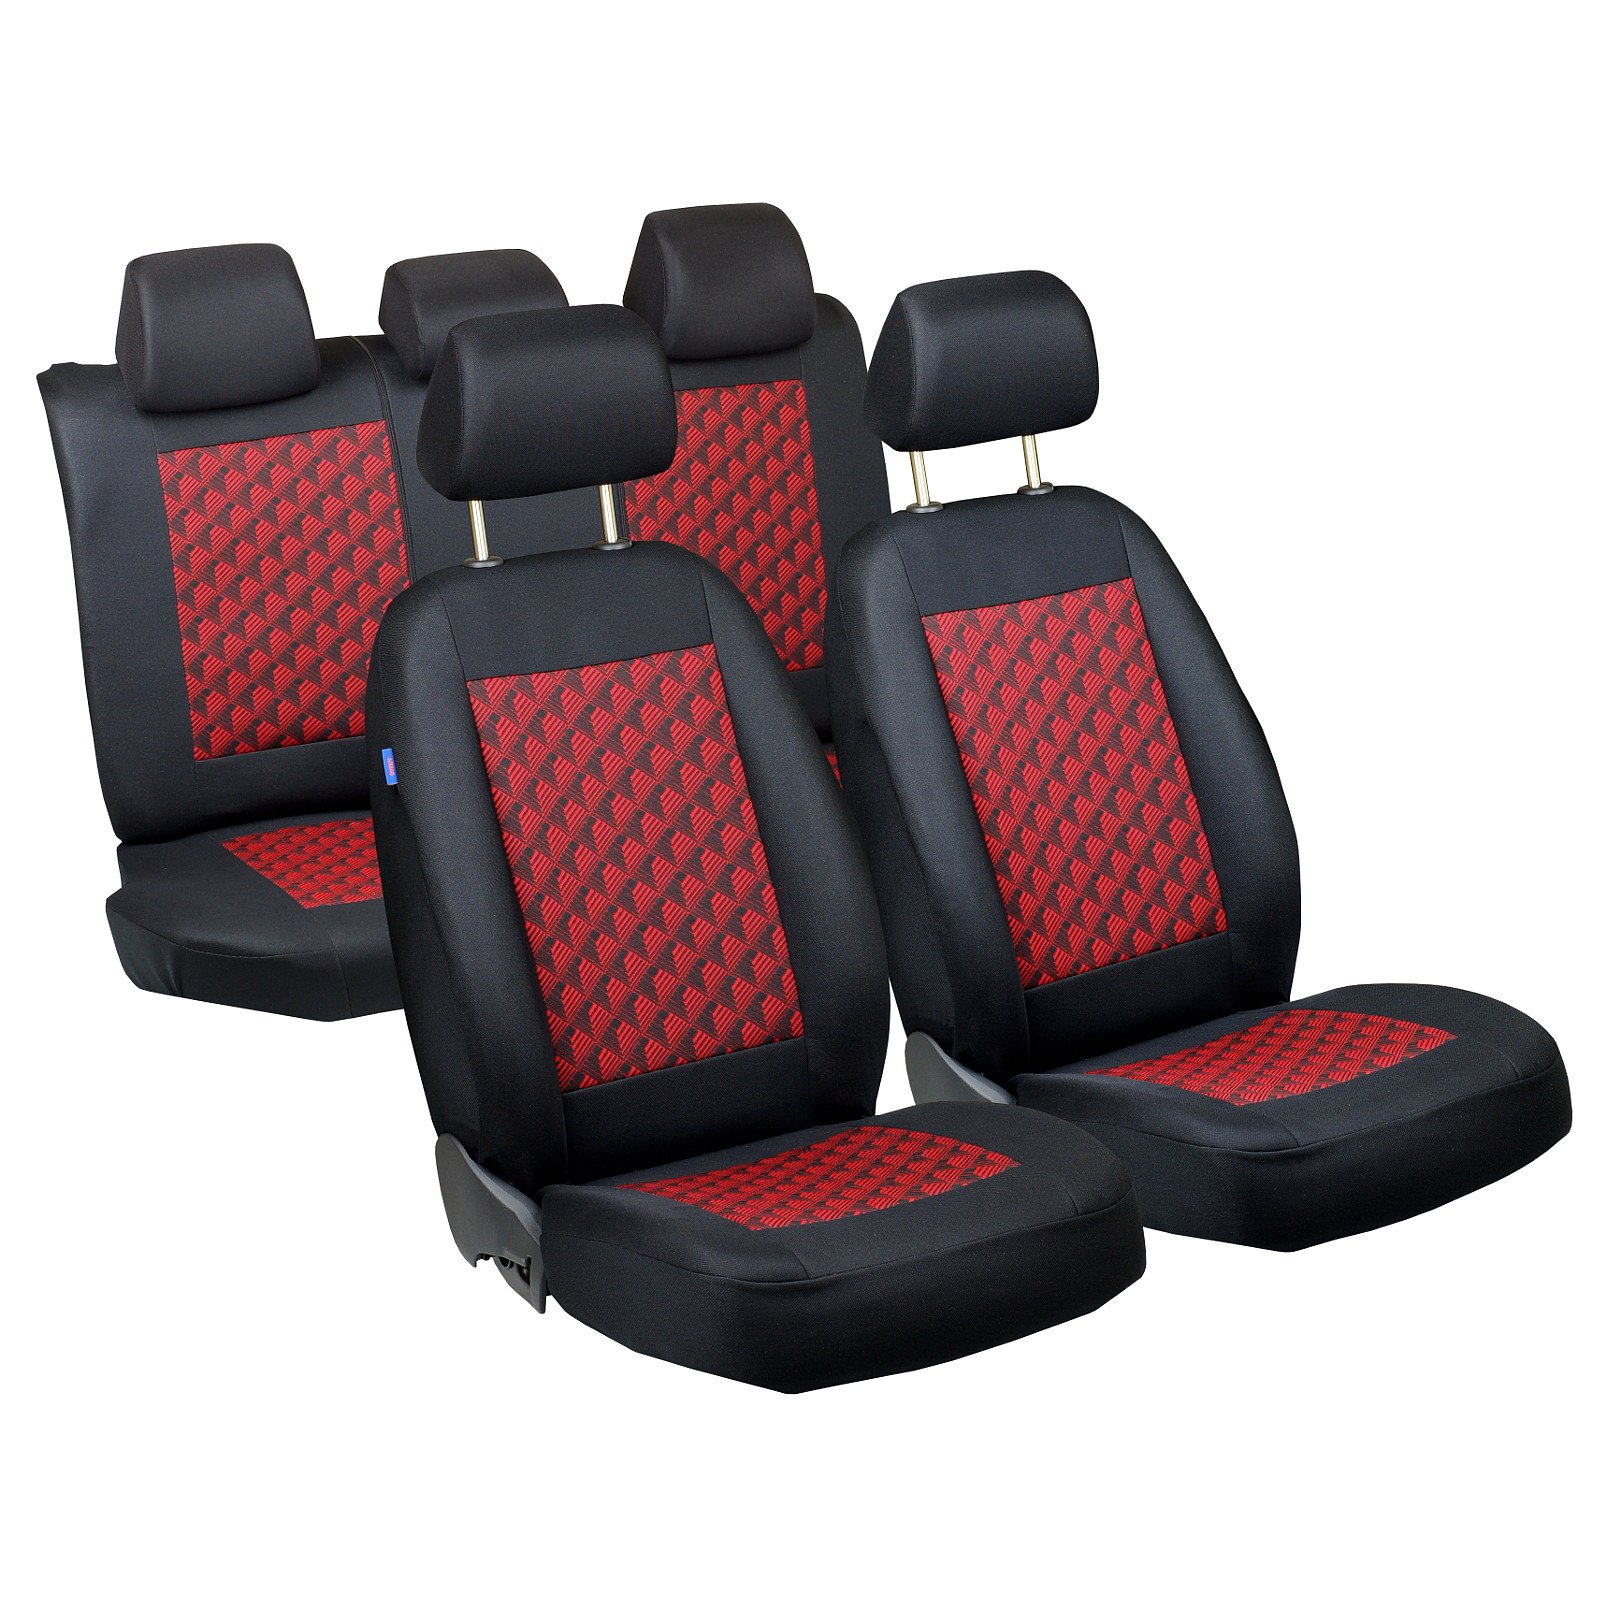 R21 Sitzbezüge - 1 Set - Farbe Premium Schwarz-rot Effekt 3D